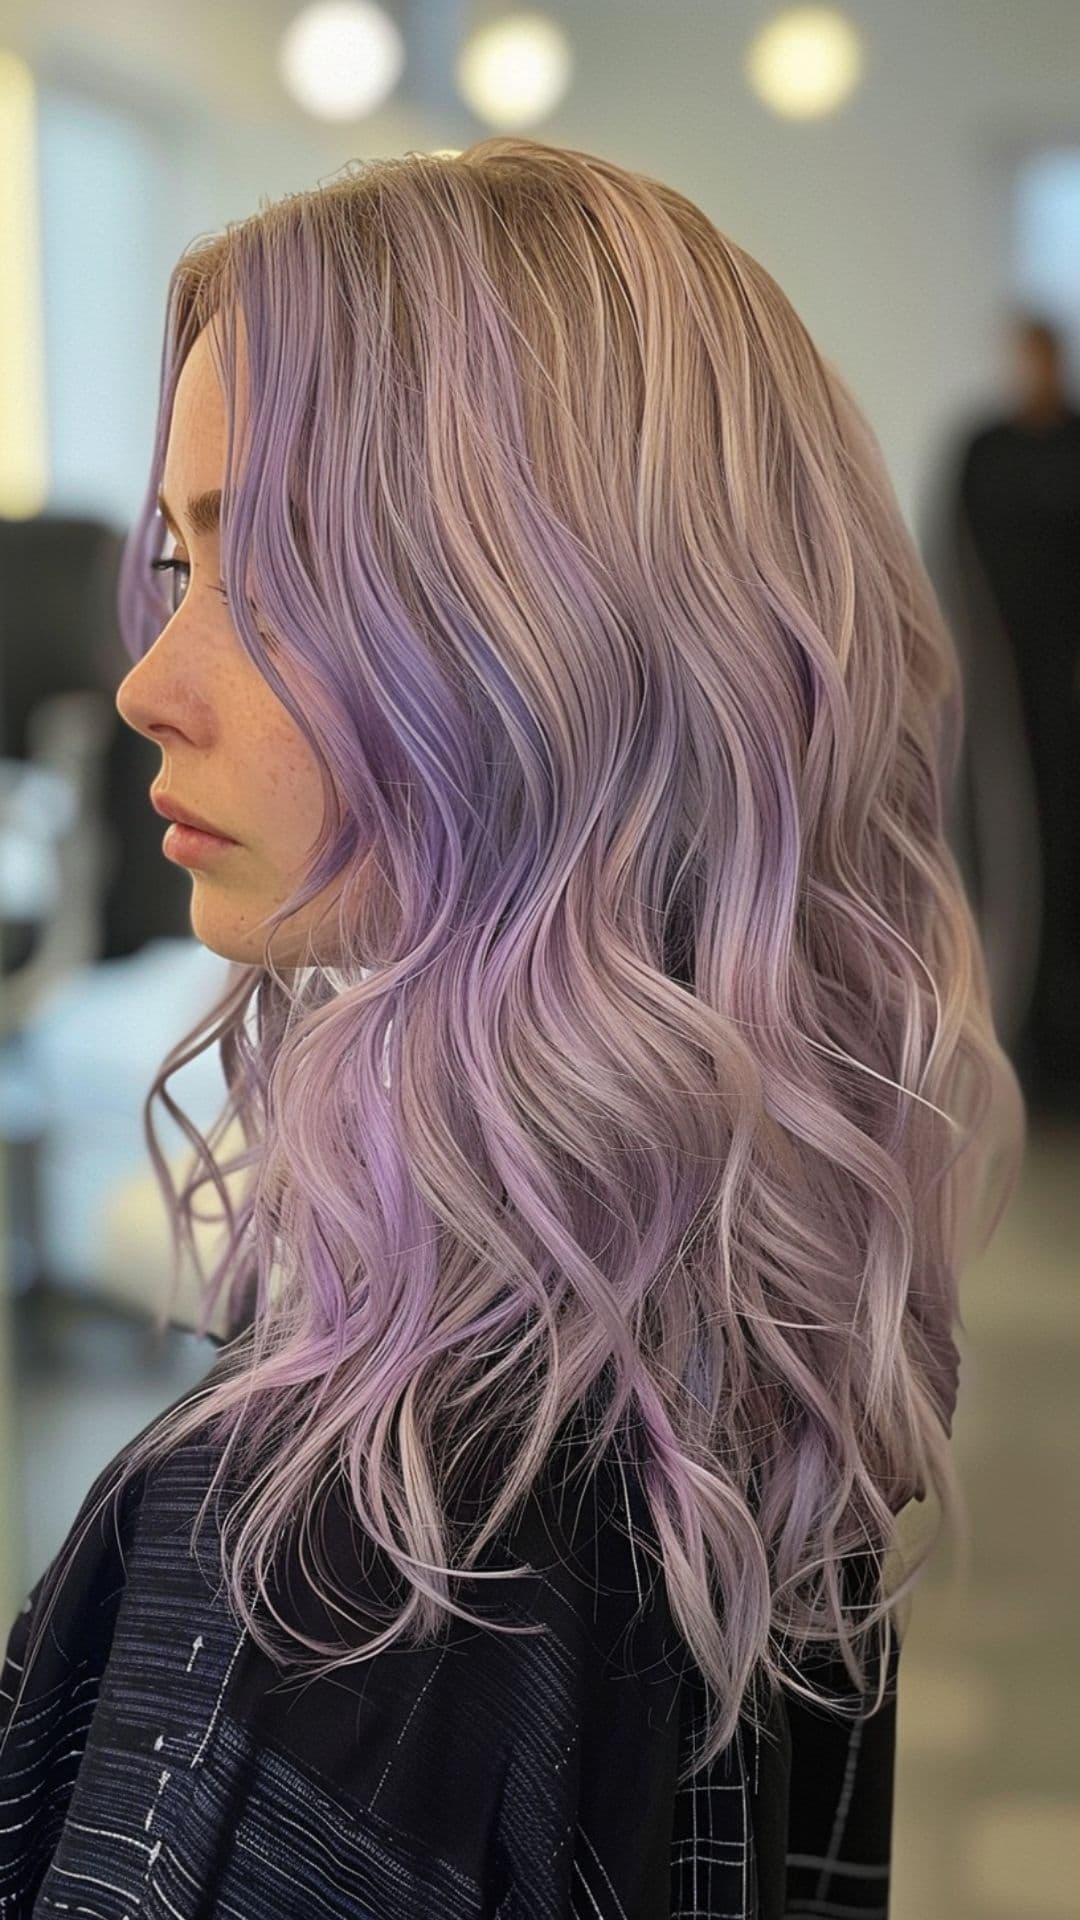 A woman modelling a pastel lilac hair.